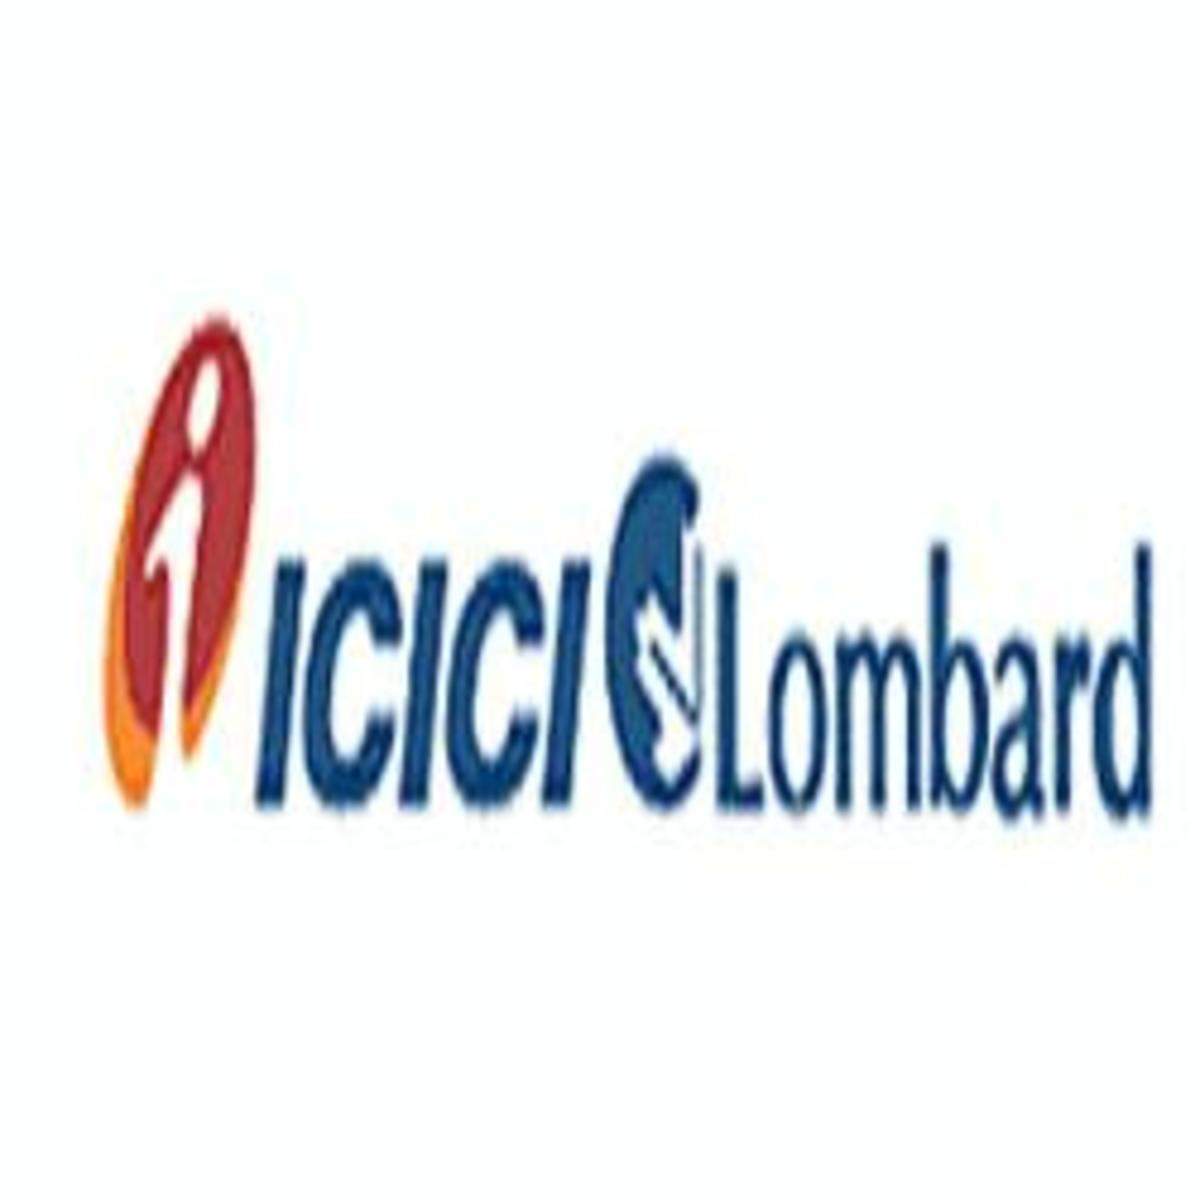 ICICI LOMBARD Archives - Bimabazaar.com-Insurance Articles, Insurance News,  Insurance Books, Insurance Magazine, IRDA Exam